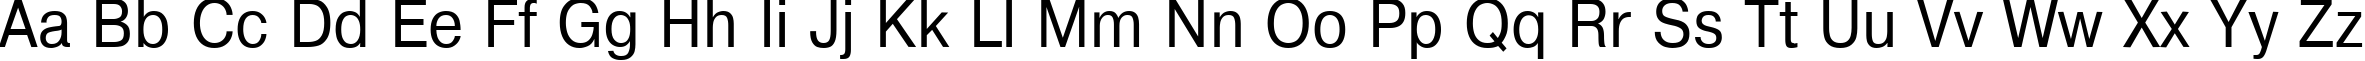 Пример написания английского алфавита шрифтом NTHarmonica Normal90n